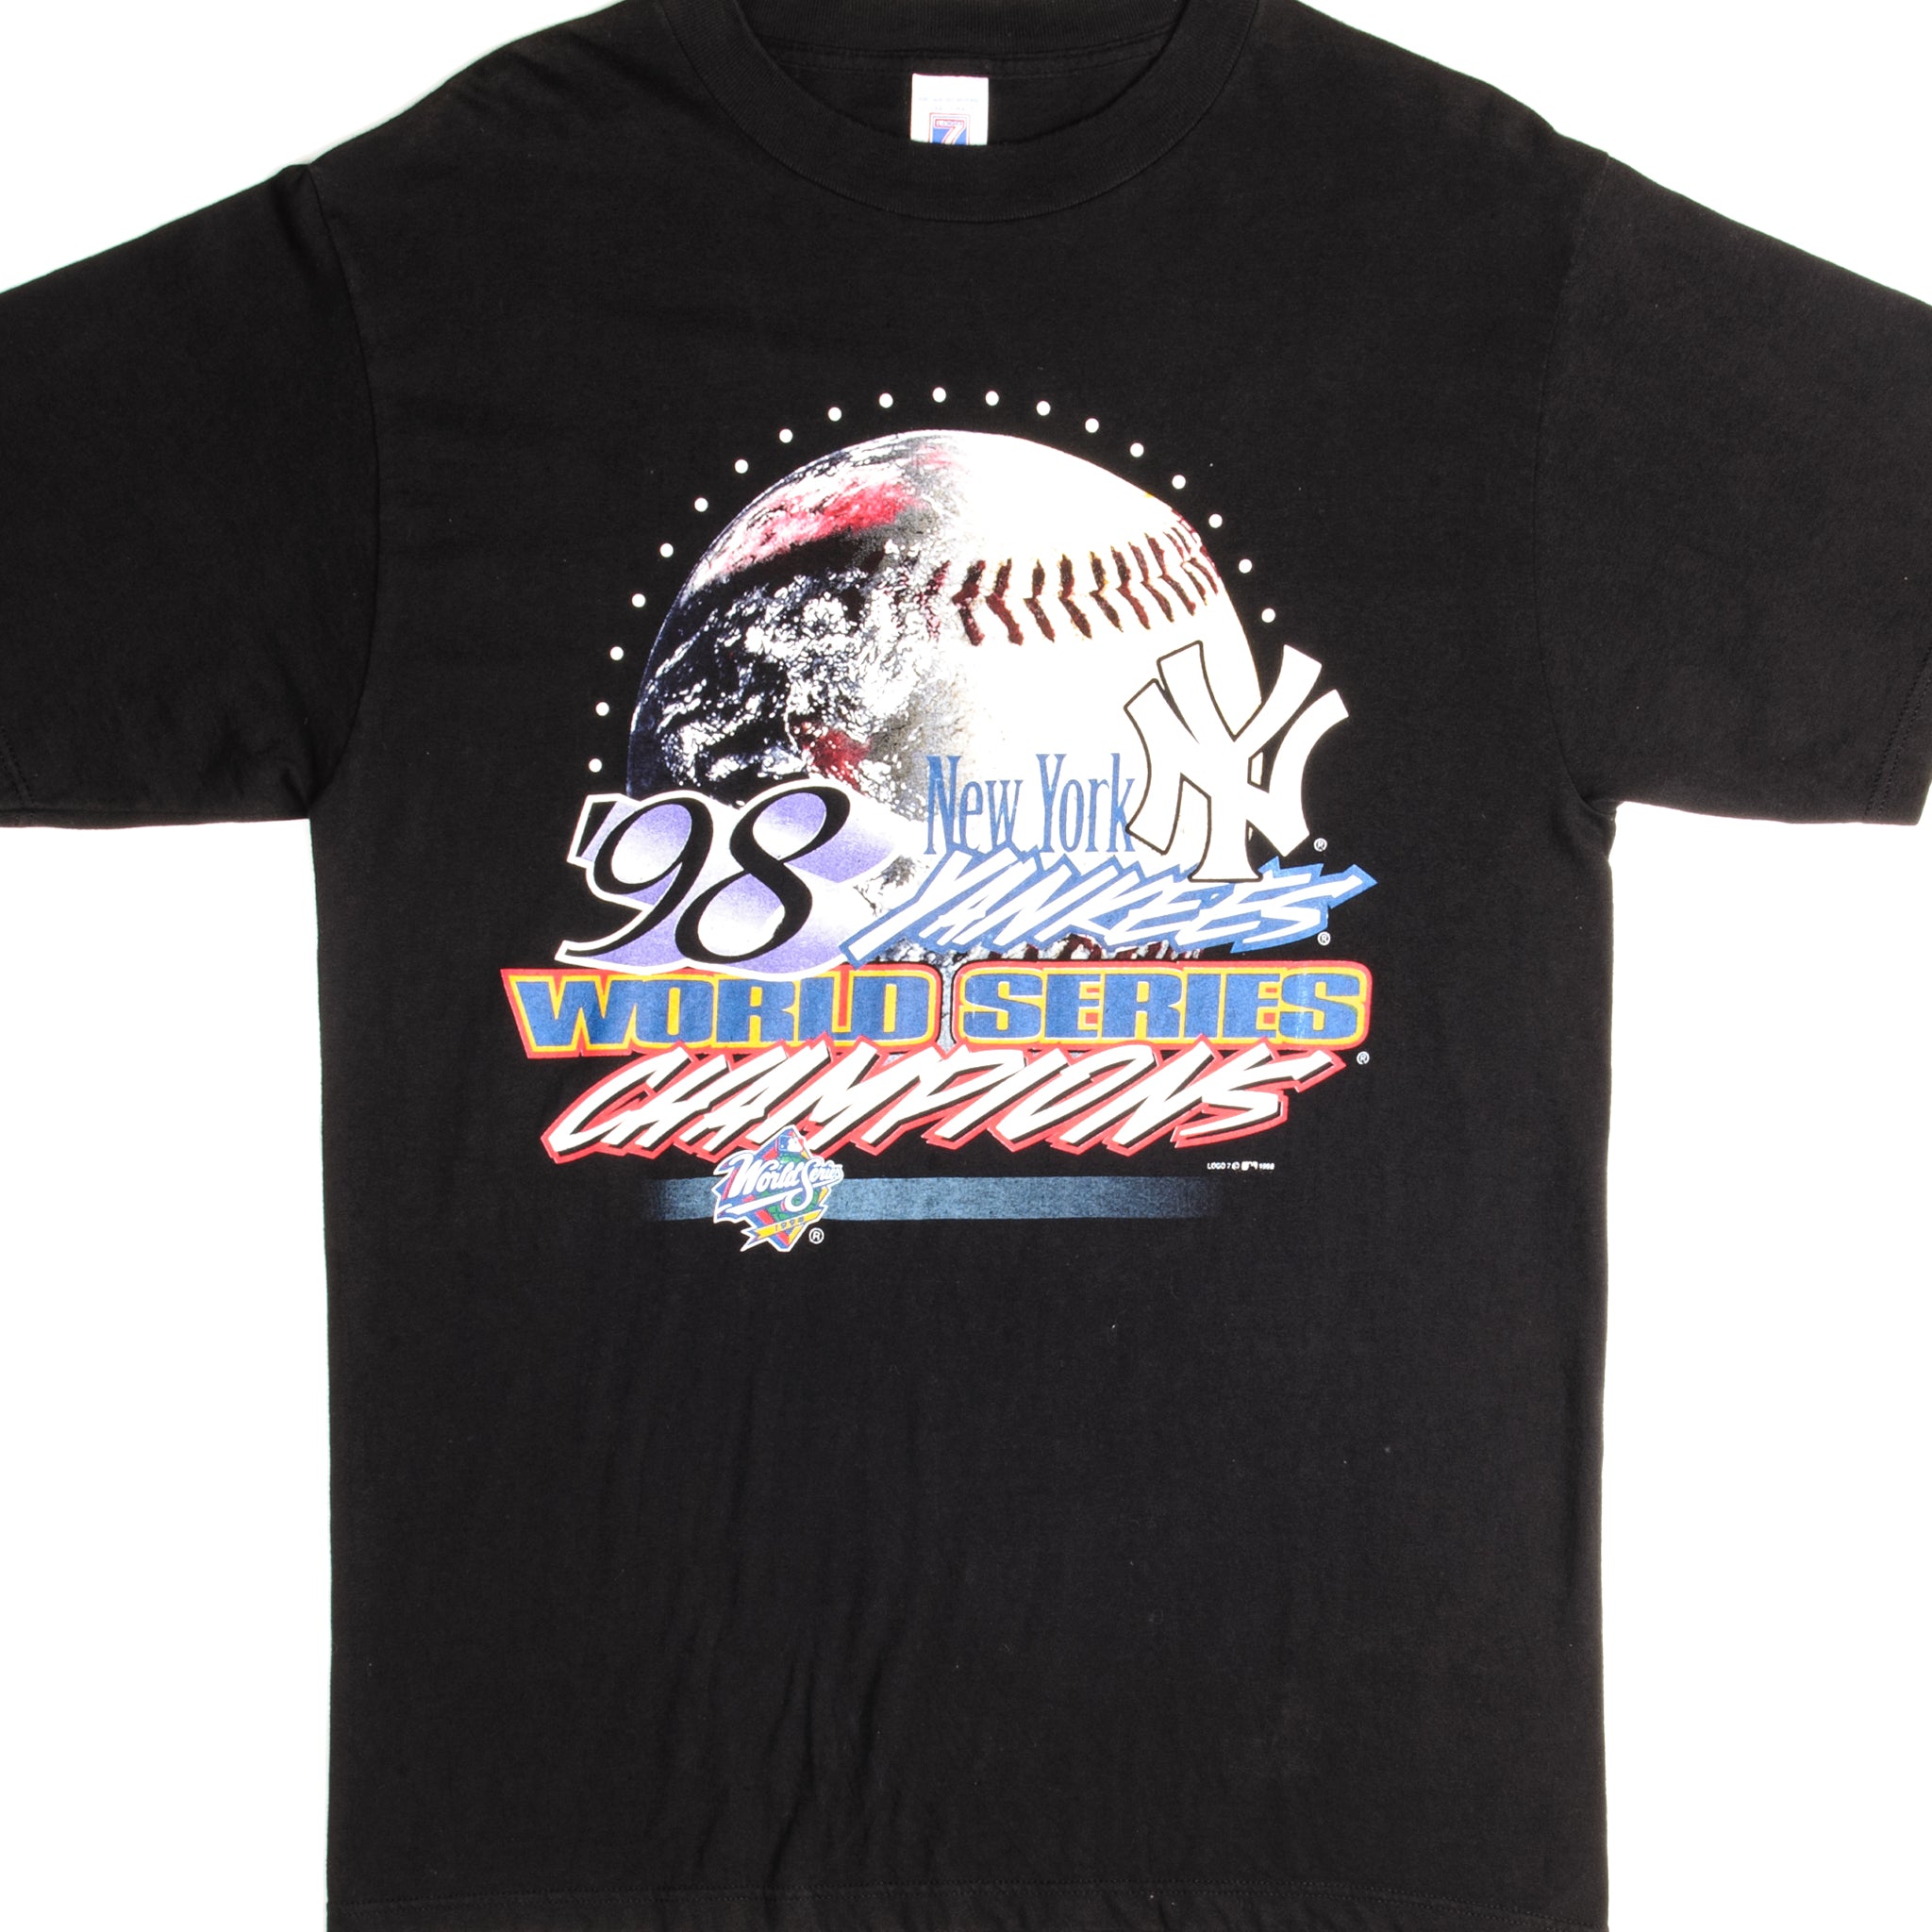 Vintage Champion MLB NY Yankees Tee Shirt 1987 Size Small Made in USA